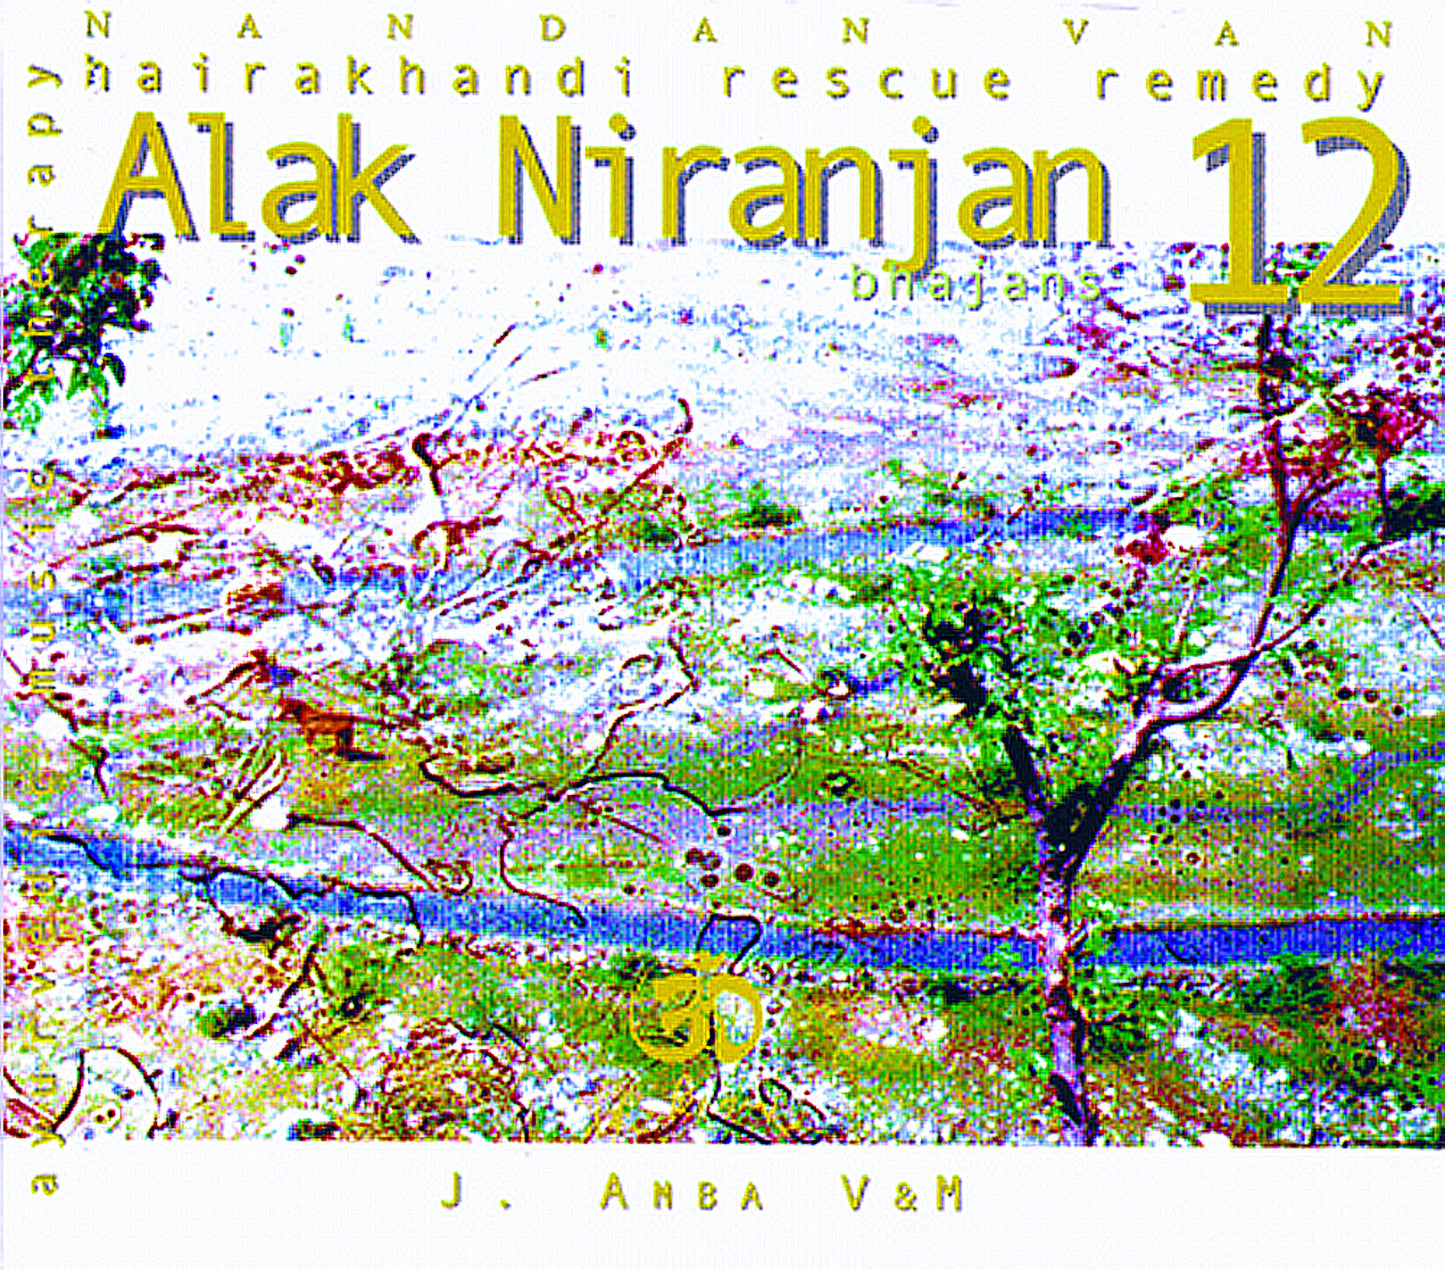 Alak Niranjan, Bhajans - Hairakhandi Rescue Remedy 12 - Hindu Sanatan Dharma Spirituality Music Therapy for Meditation